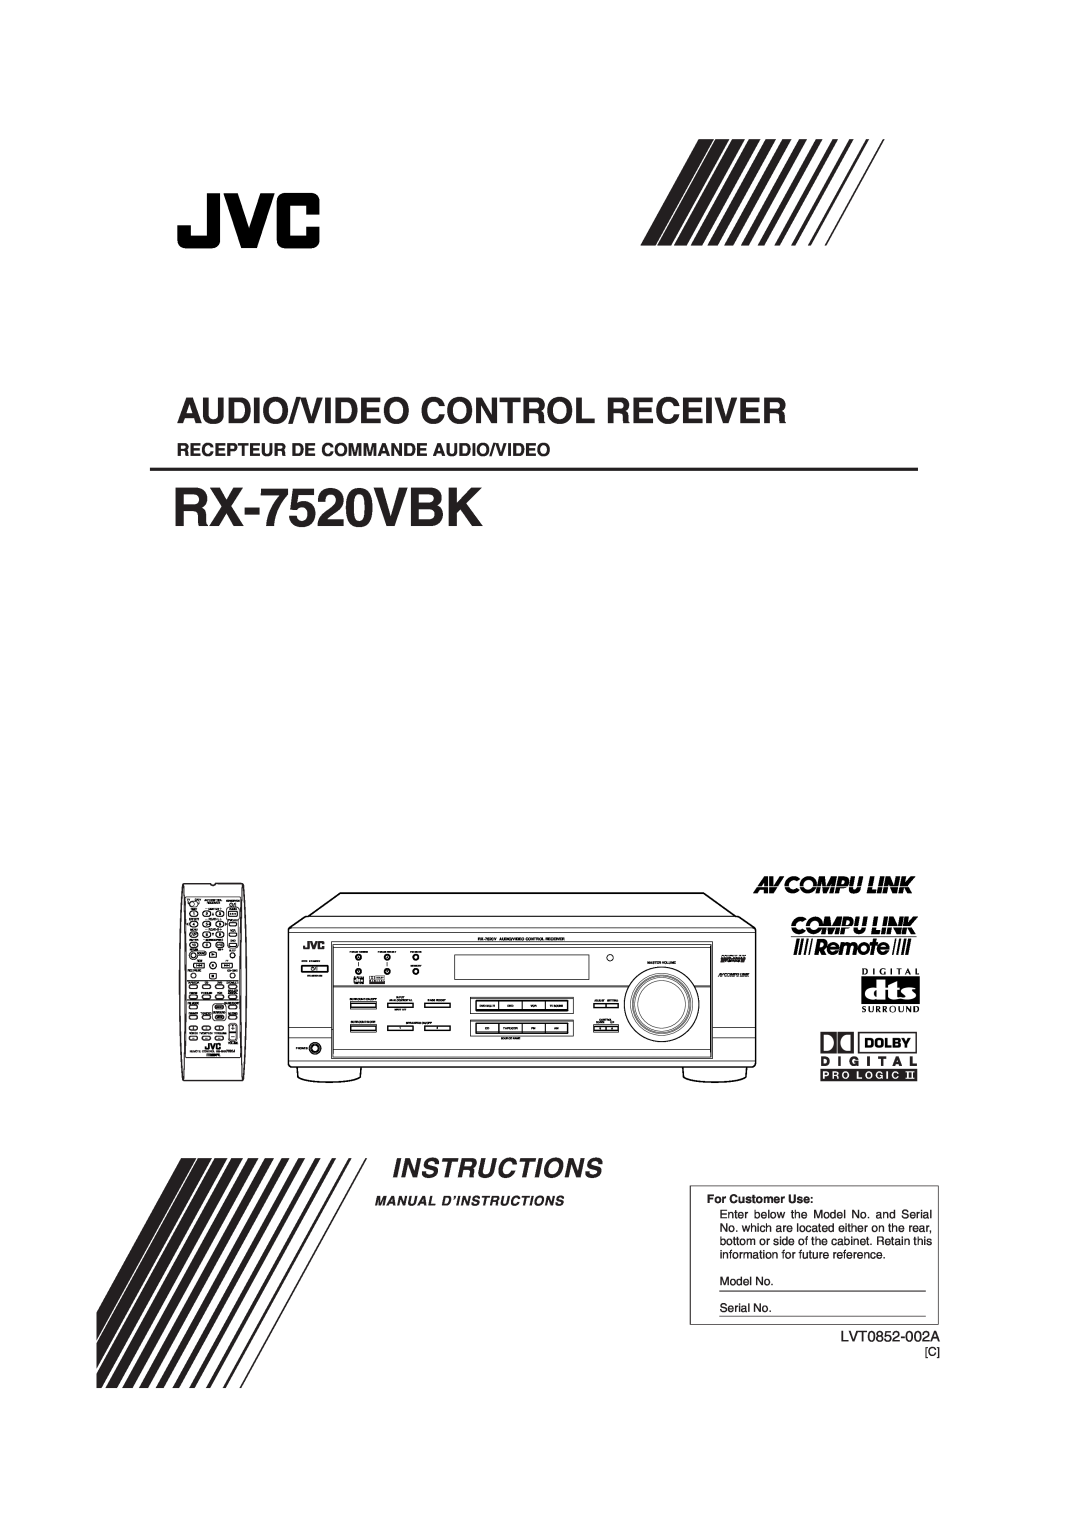 JVC RX-7520VBK manual Recepteur De Commande Audio/Video, LVT0852-002A, Audio/Video Control Receiver, Instructions, Remote 